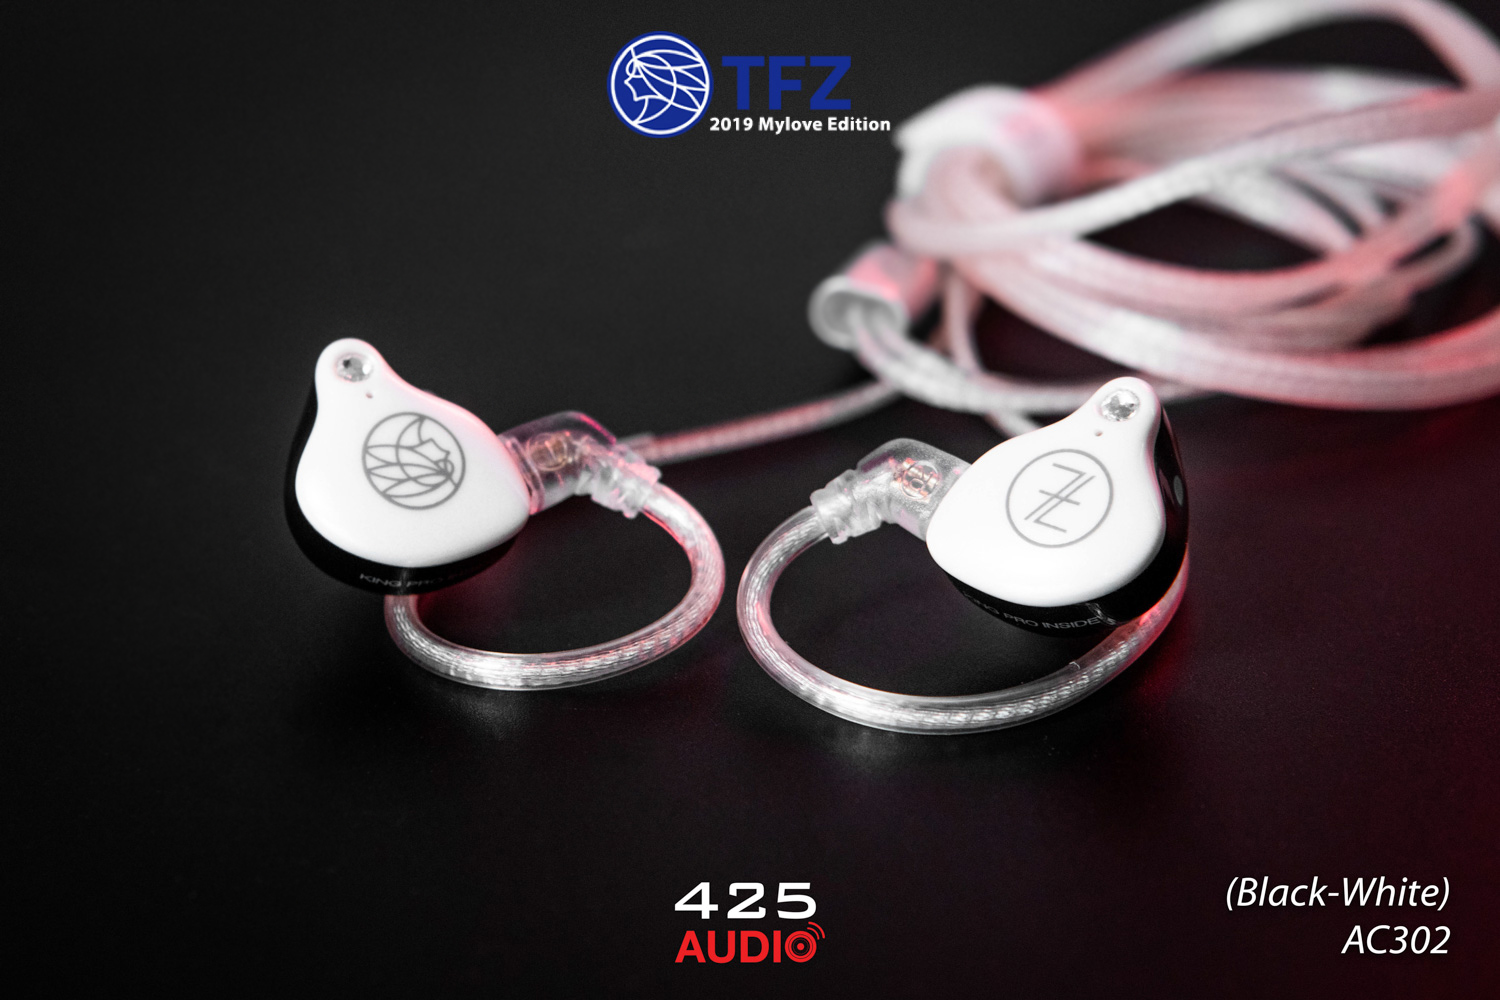 tfz 2019 mylove edition,หูฟัง,in-ear monitor,3.5 มม,เบสหนัก,V-shape,ขั้ว 2 pin,สายทองแดงชุบเงิน,ถอดสายได้